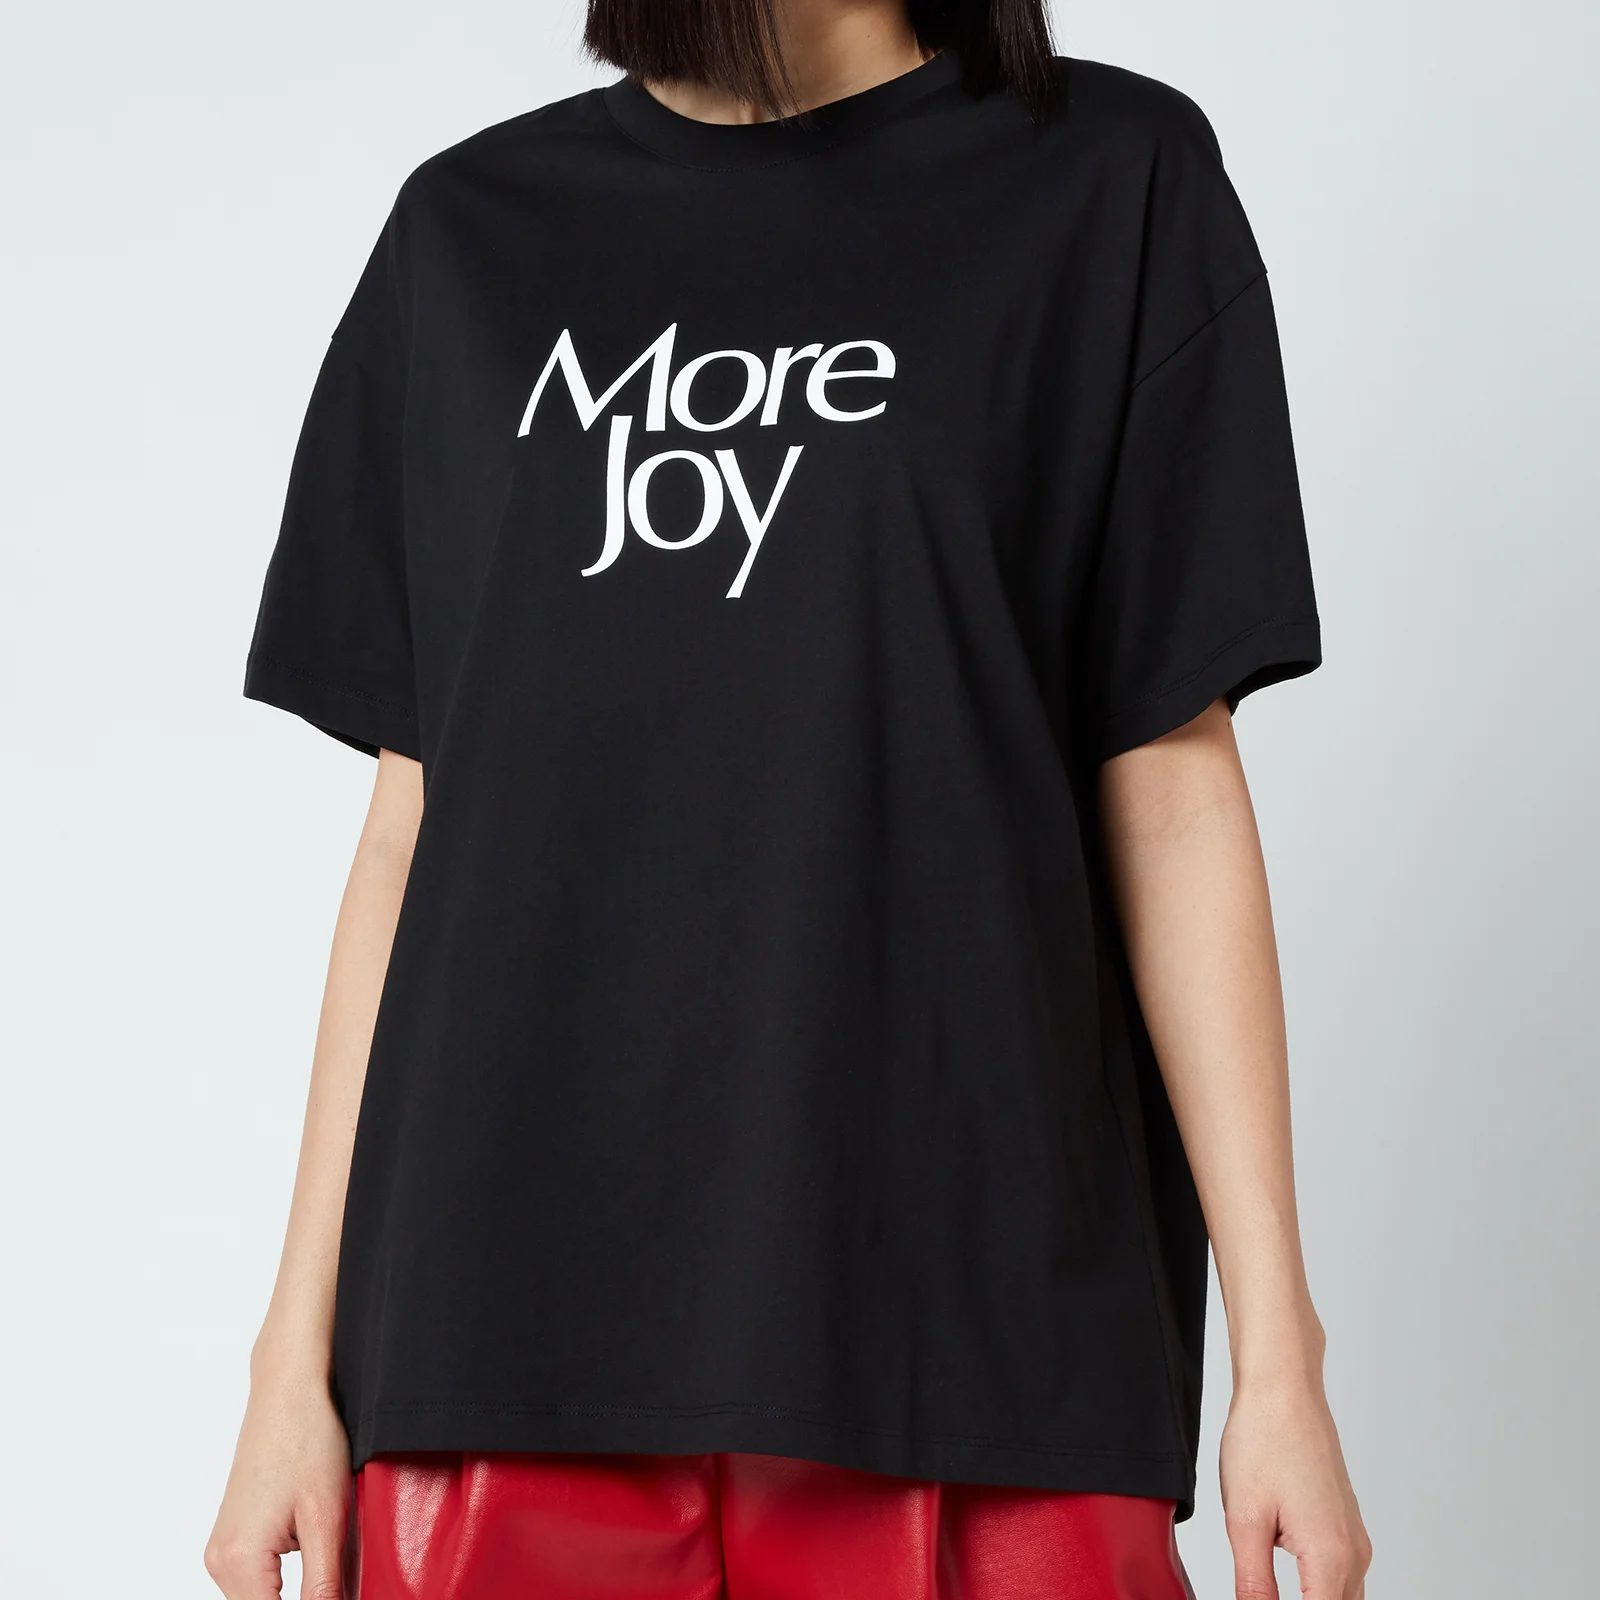 More Joy Women's More Joy T-Shirt - Black Image 1